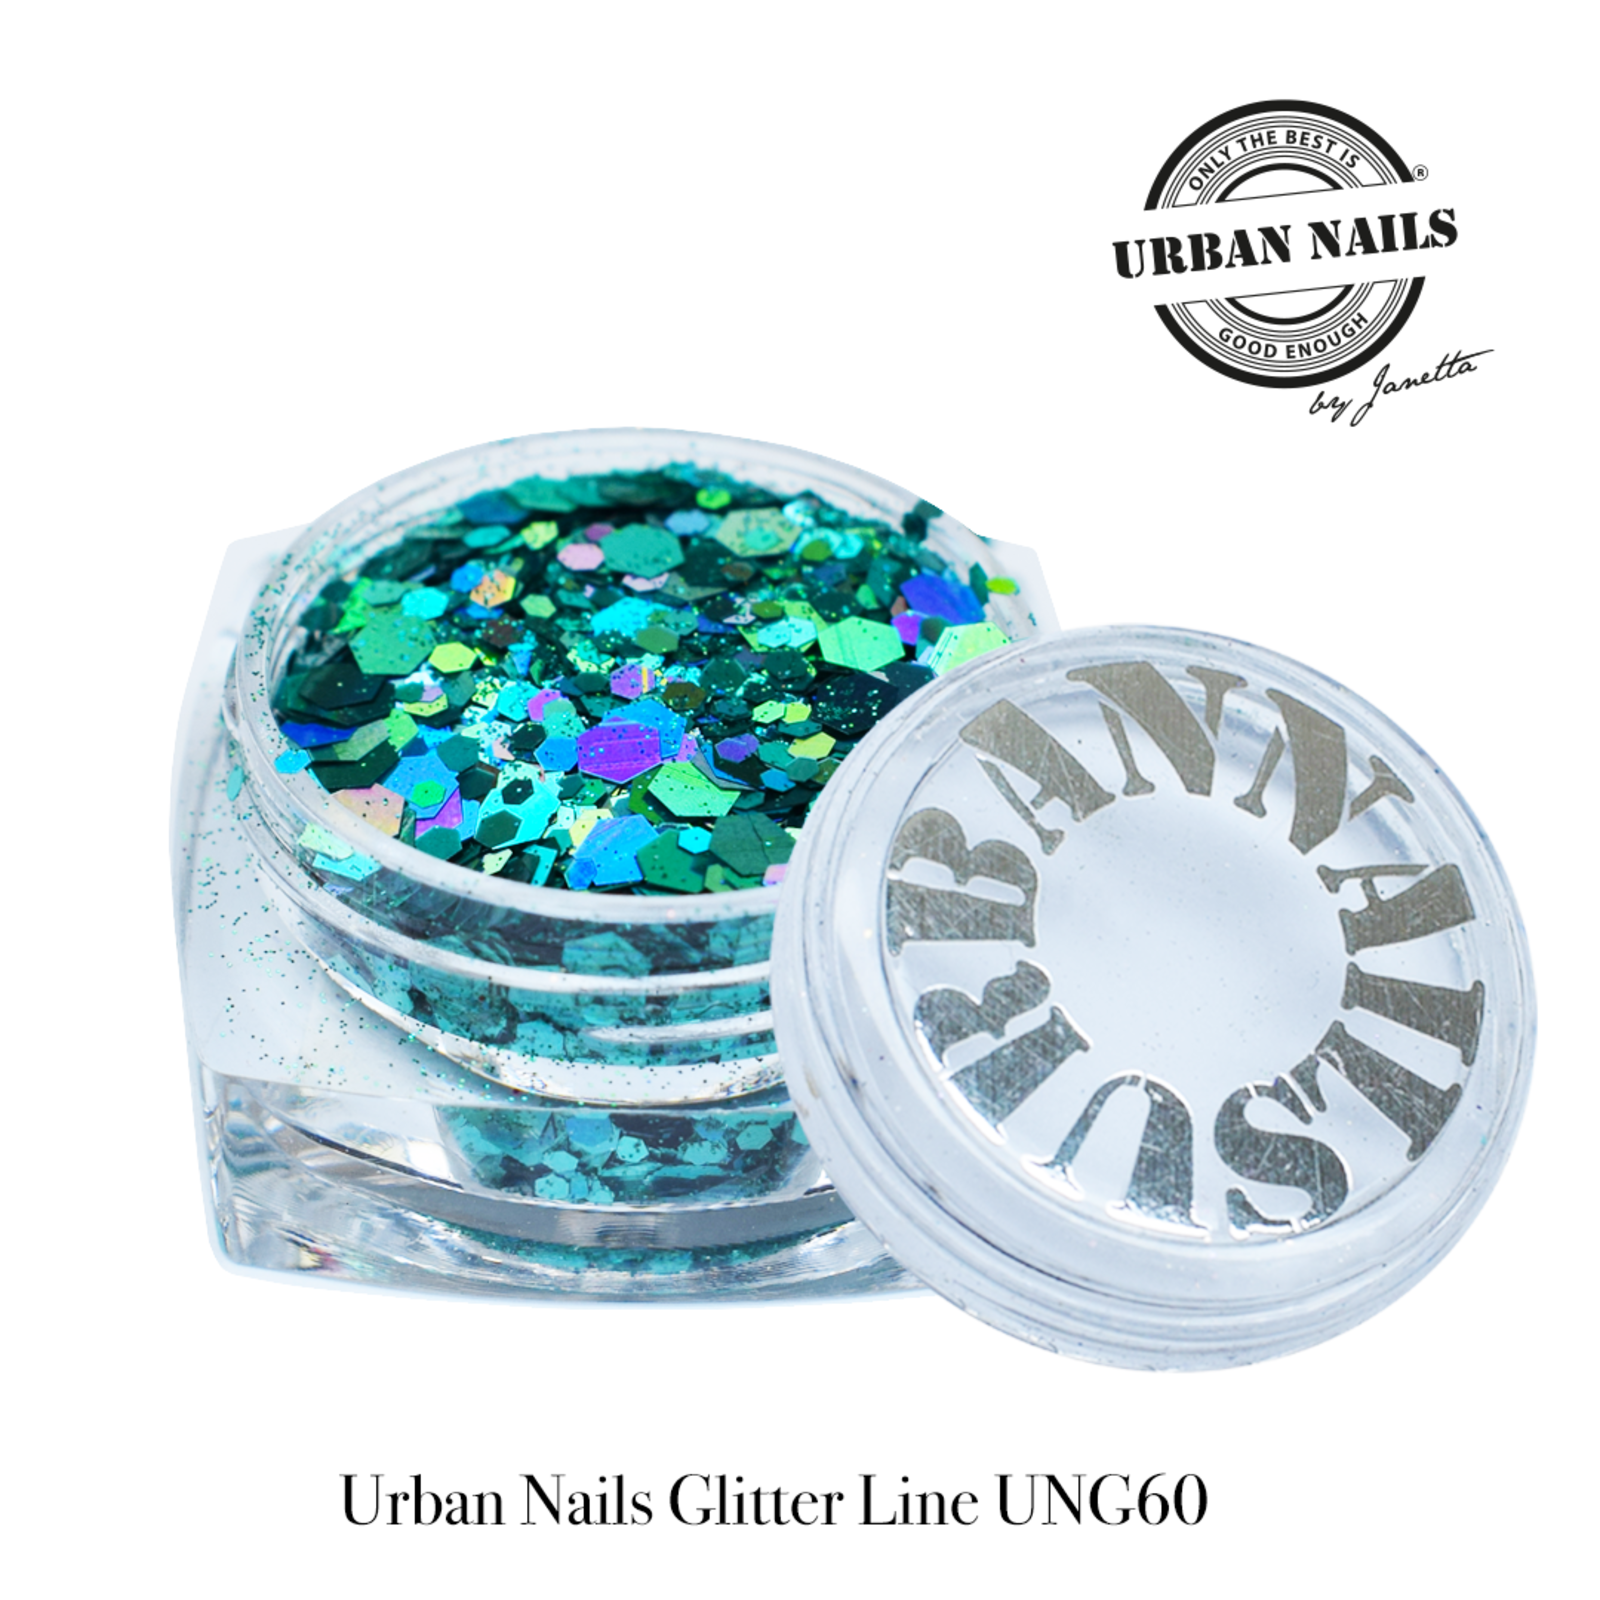 Urban nails Glitter Line UNG60